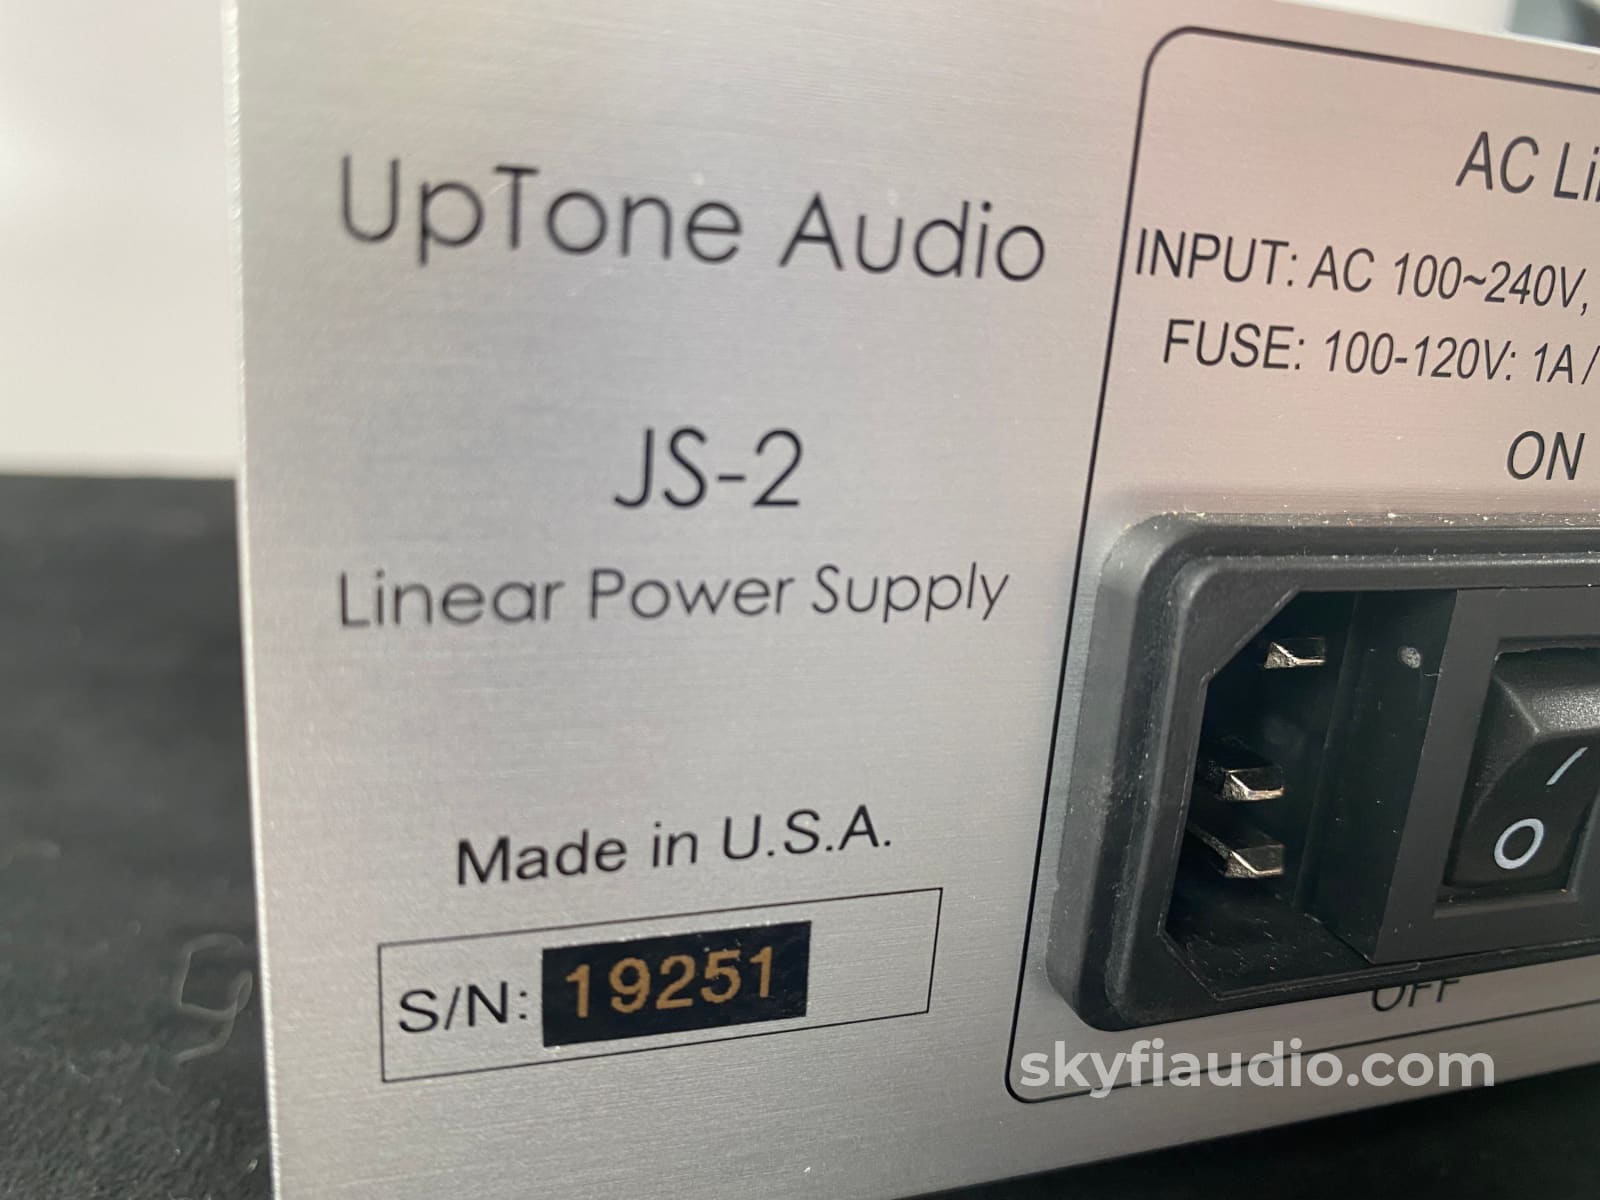 Uptone Audio Js-2 Linear Power Supply